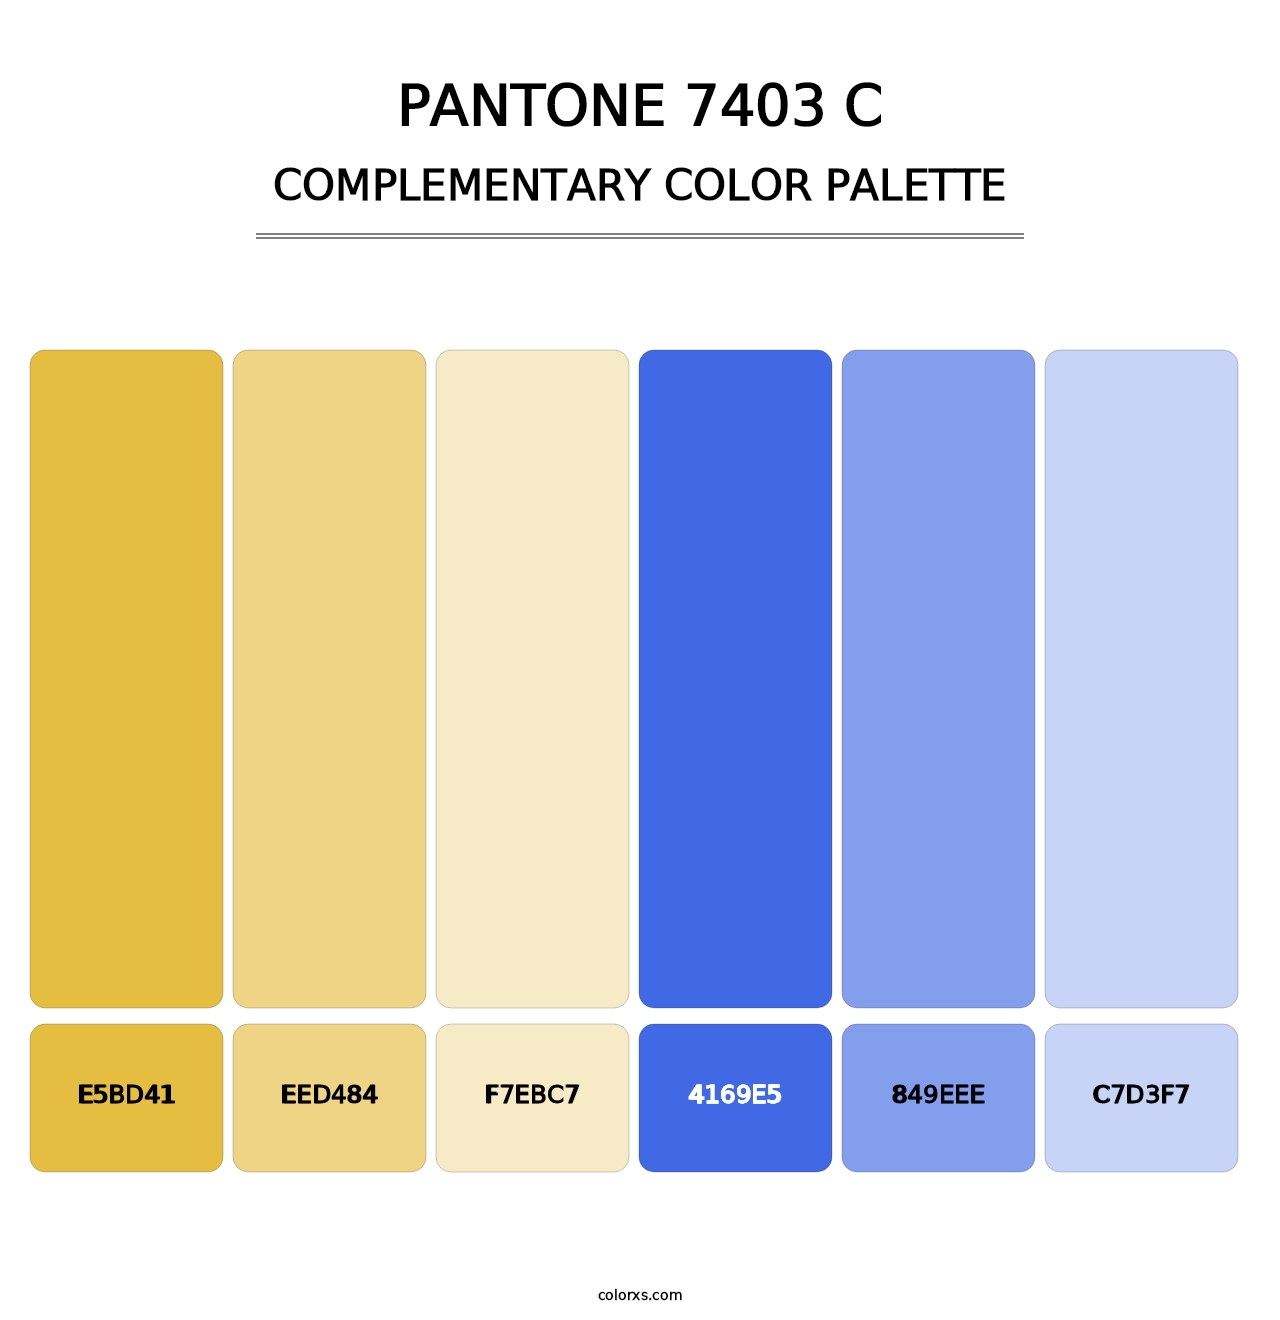 PANTONE 7403 C - Complementary Color Palette